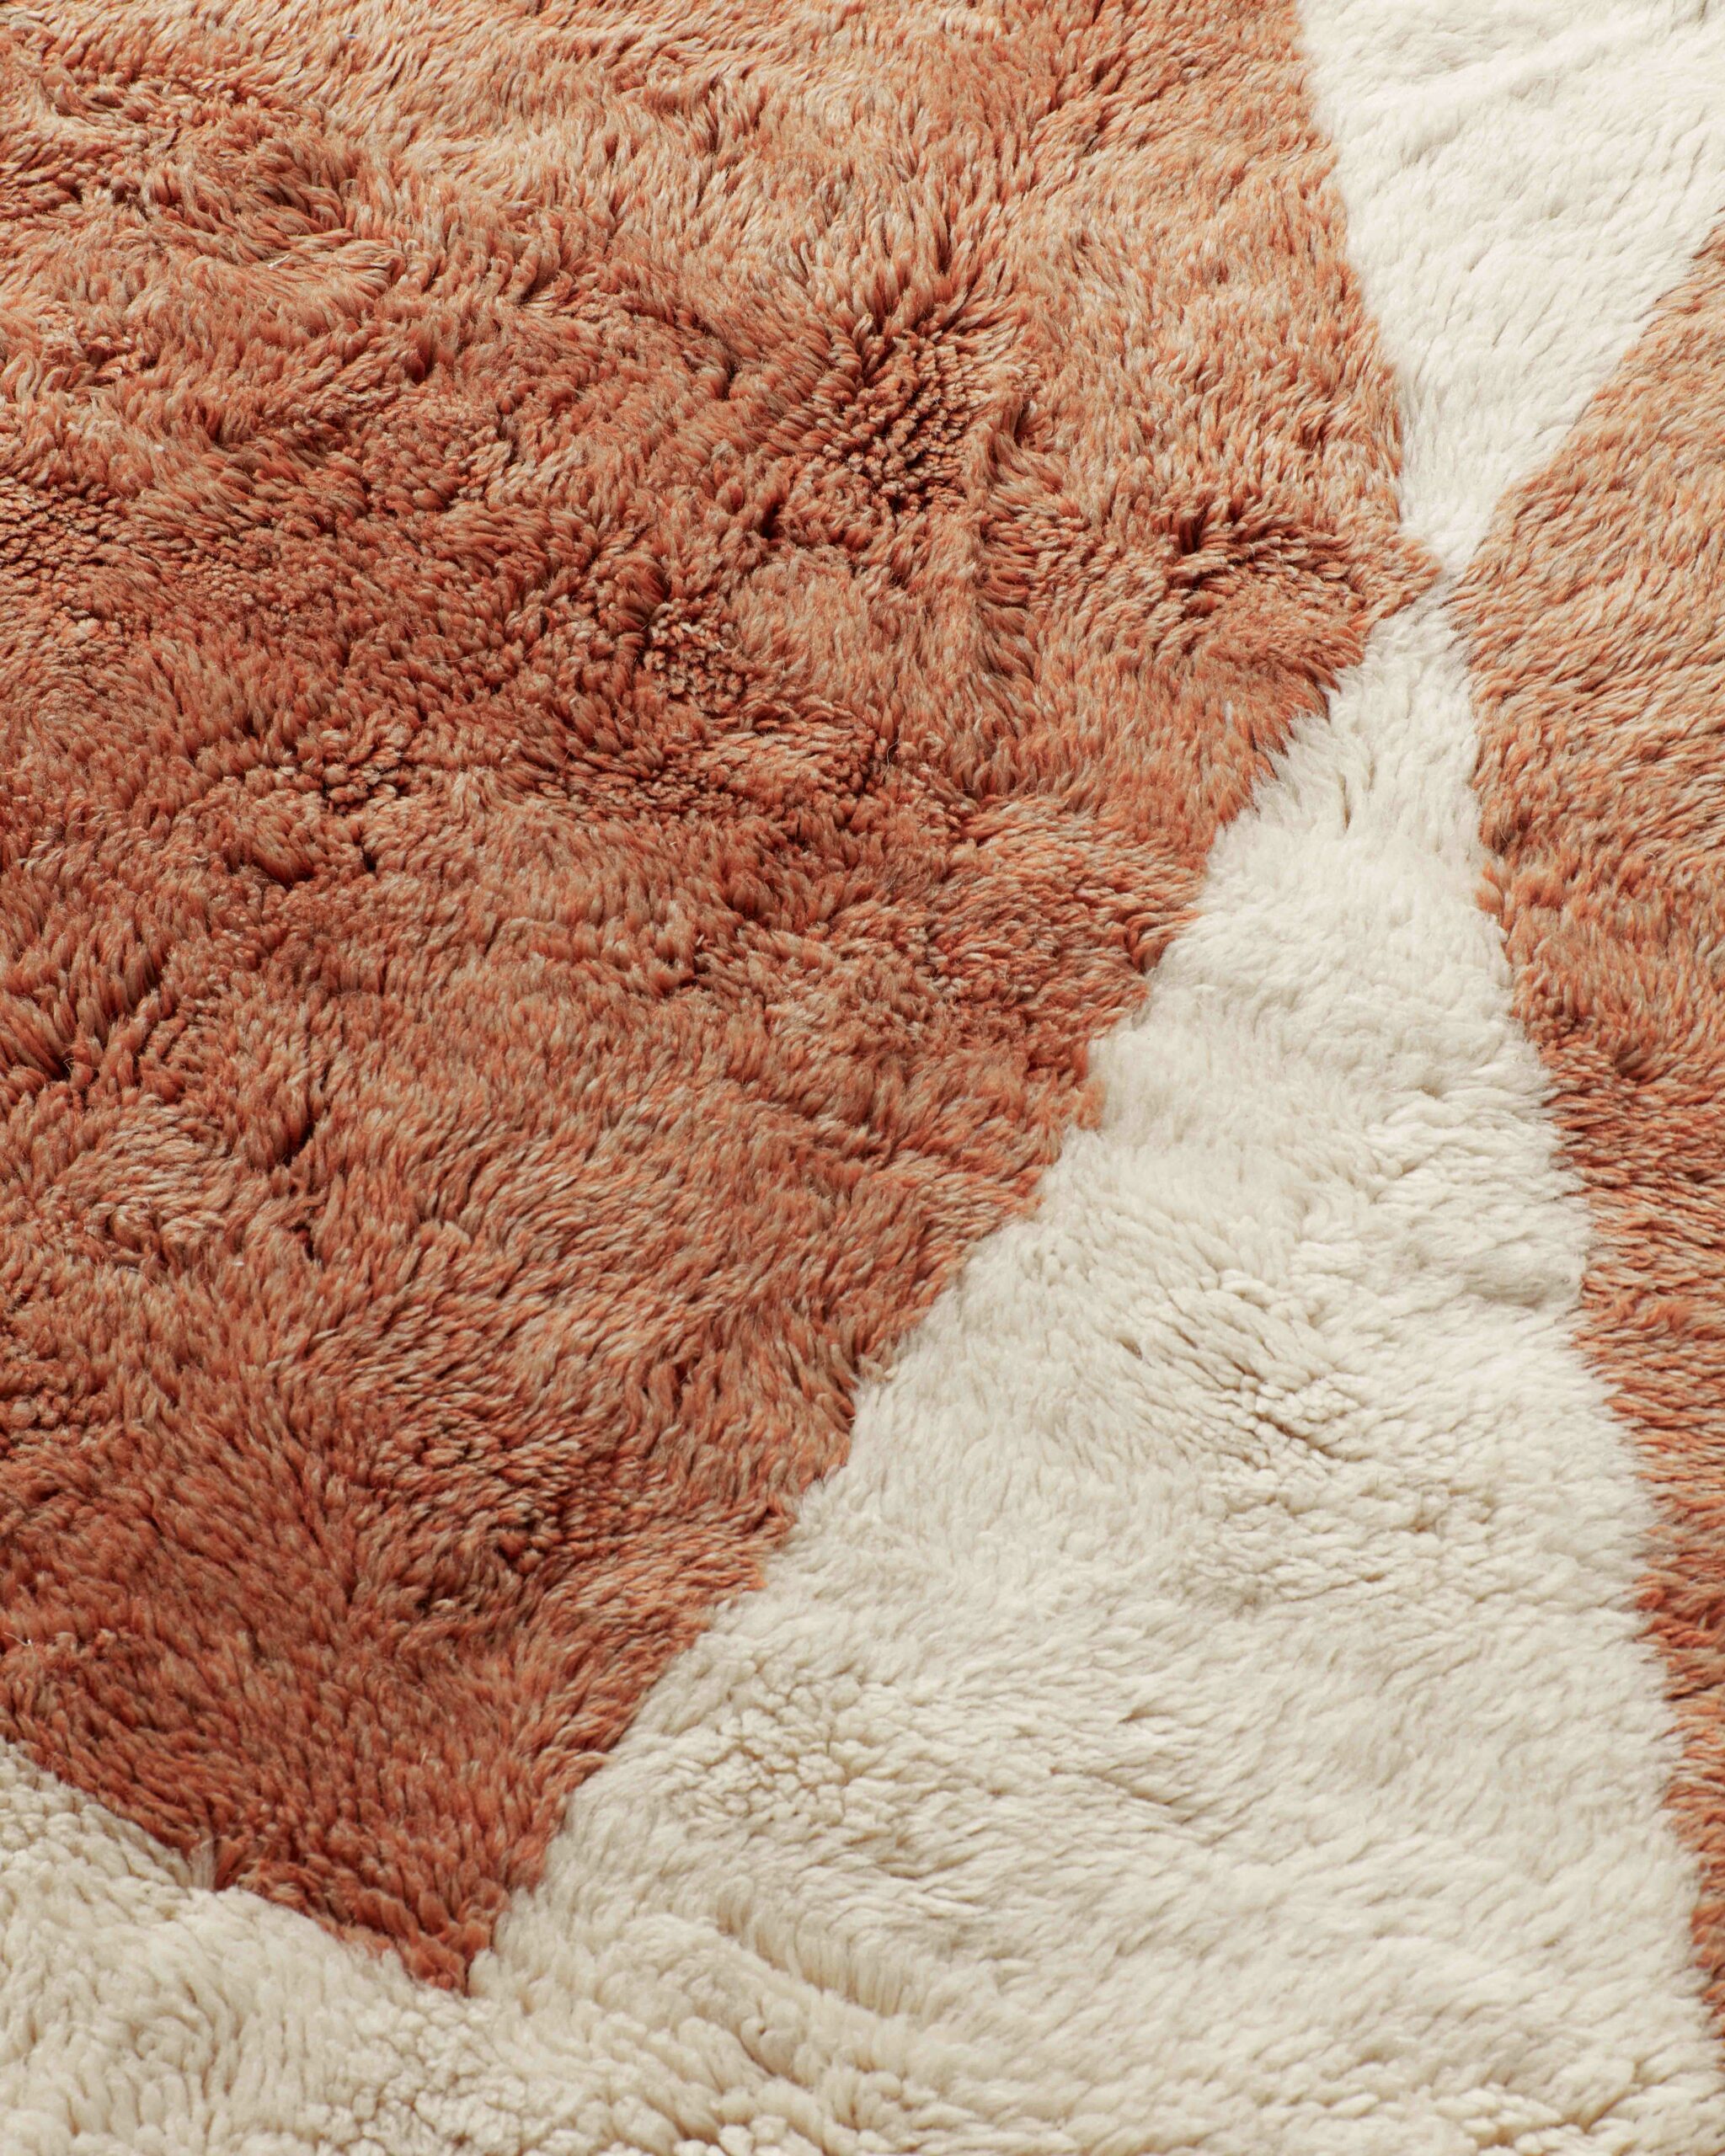 Mrirt rug with rusty shades, close